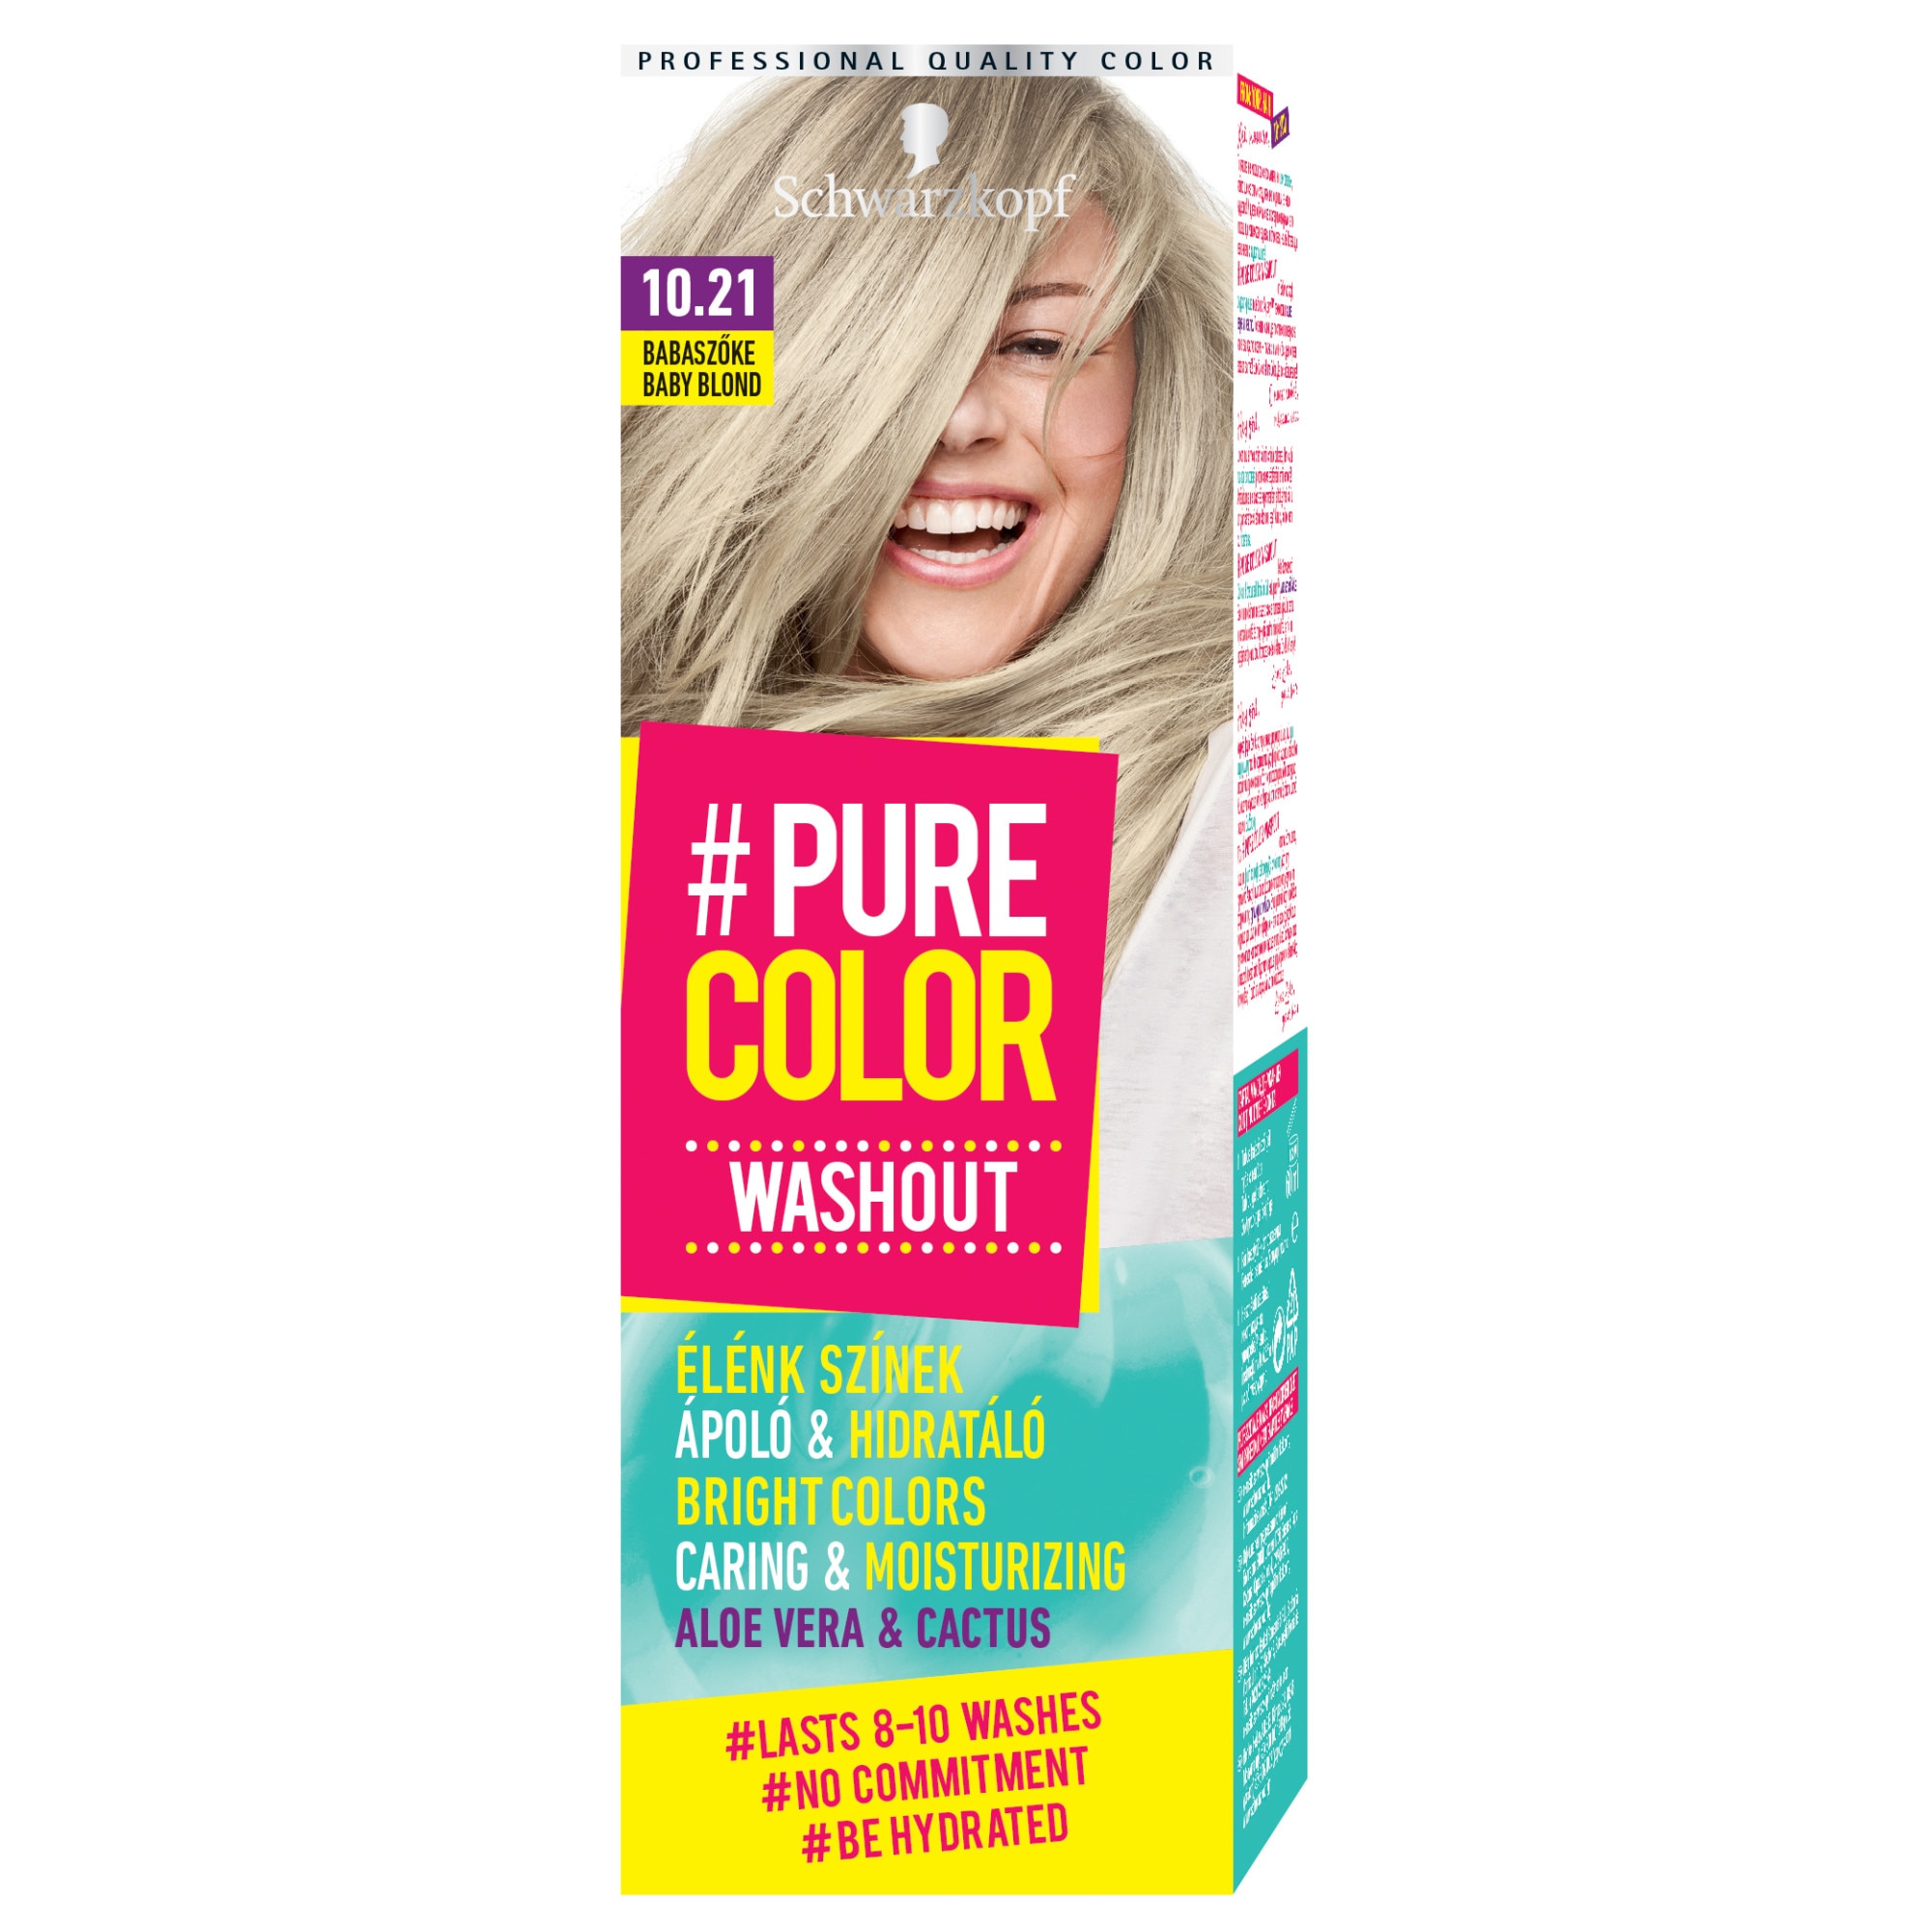 Краска для блондинок Schwarzkopf # Pure Color 10.21 Baby blond. Блонд 60. Цвет бэби блонд. Цвет краски Беби блонд.